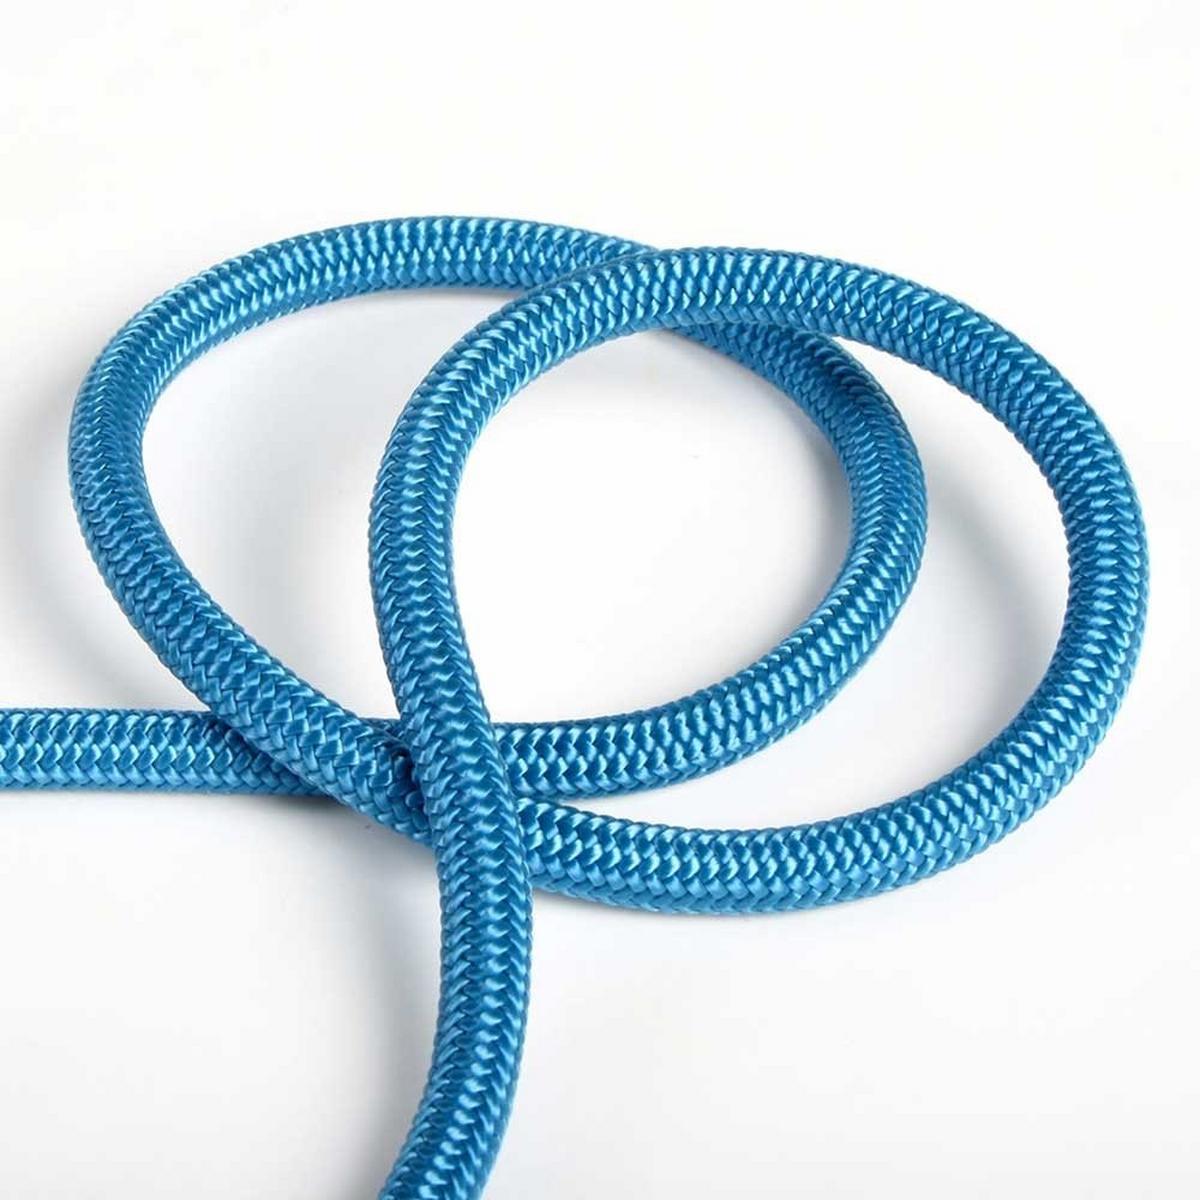 Edelweis 7mm X 5m Rope - Blue